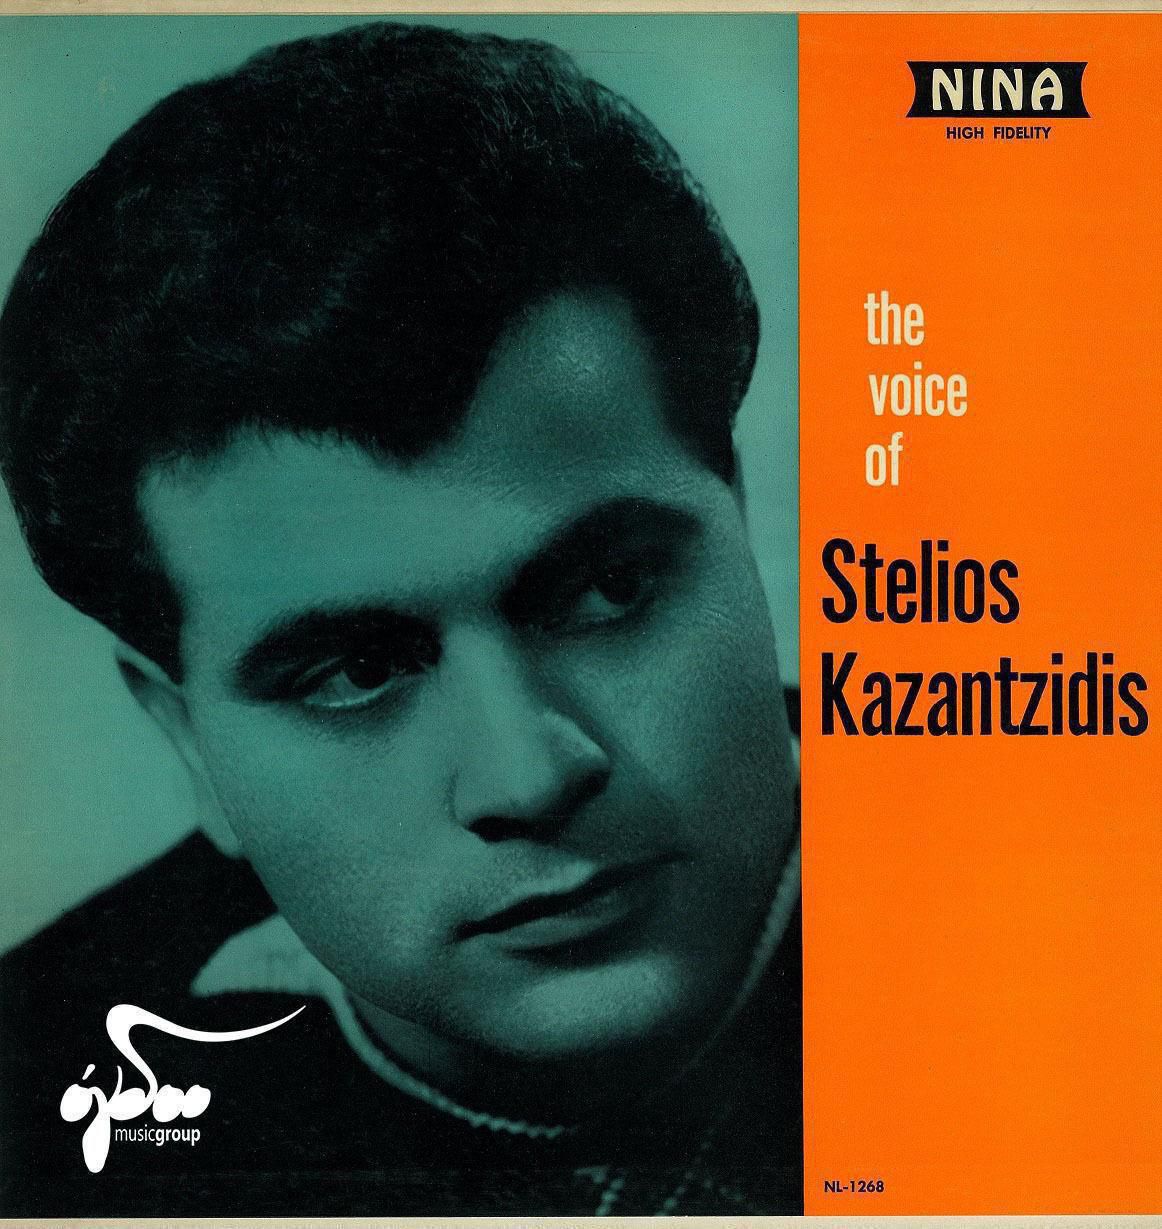 01.Kazantzidis Nina 1965